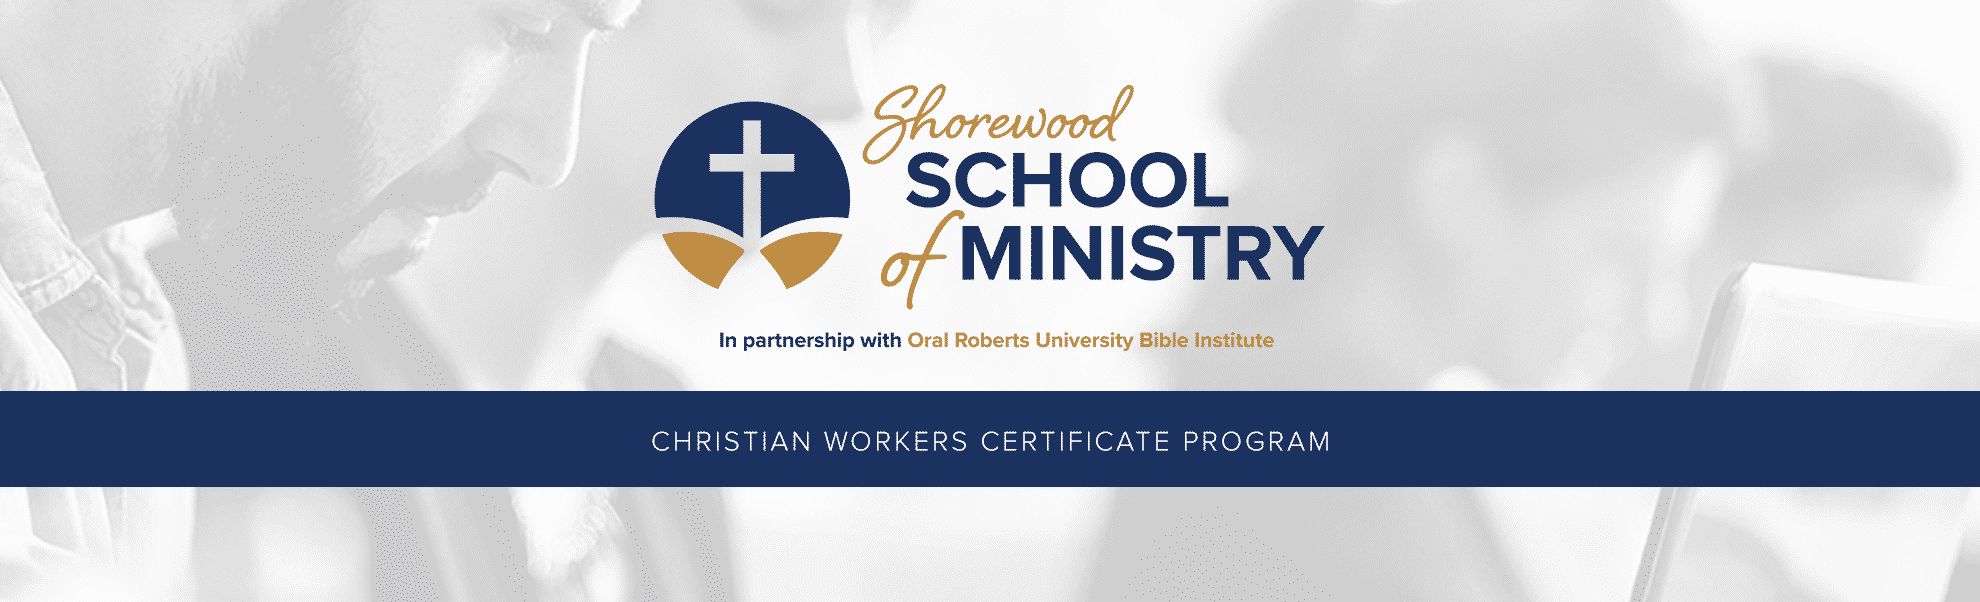 Shorewood School of Ministry • Pathway Church